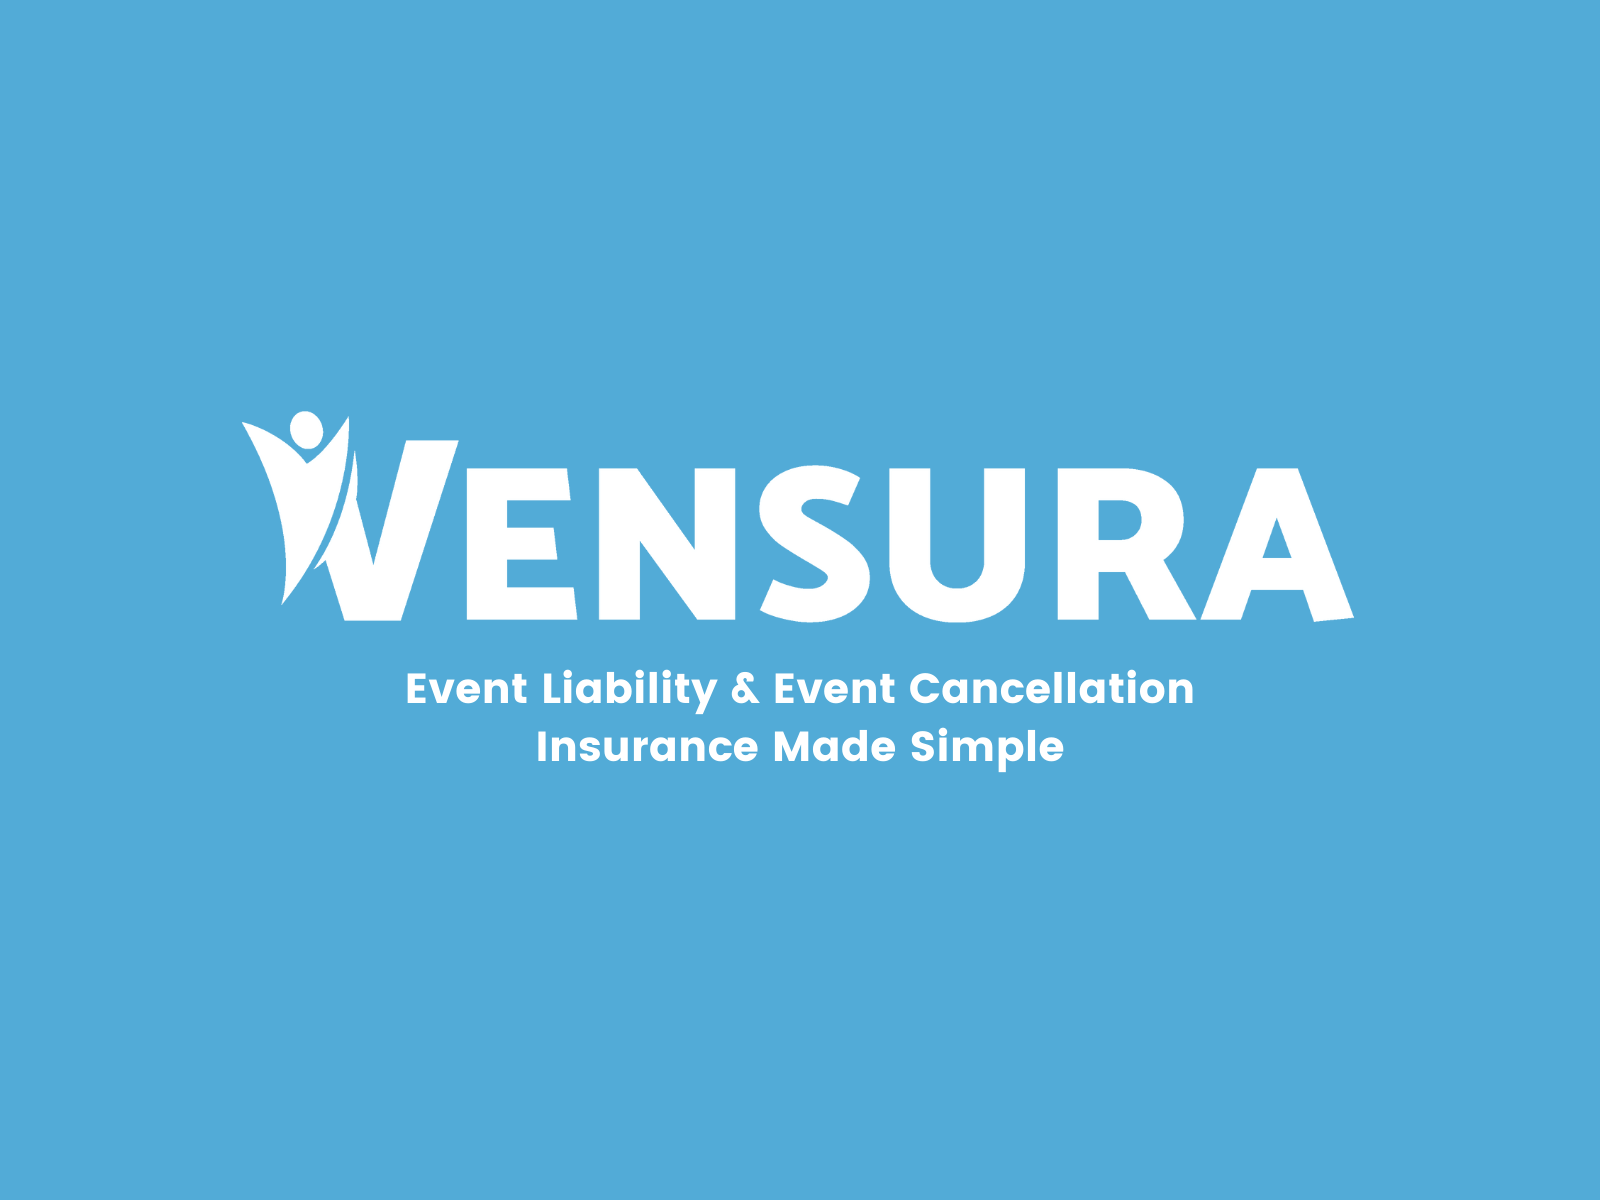 Vensura wedding insurance, wedding cancellation insurance, wedding event insurance